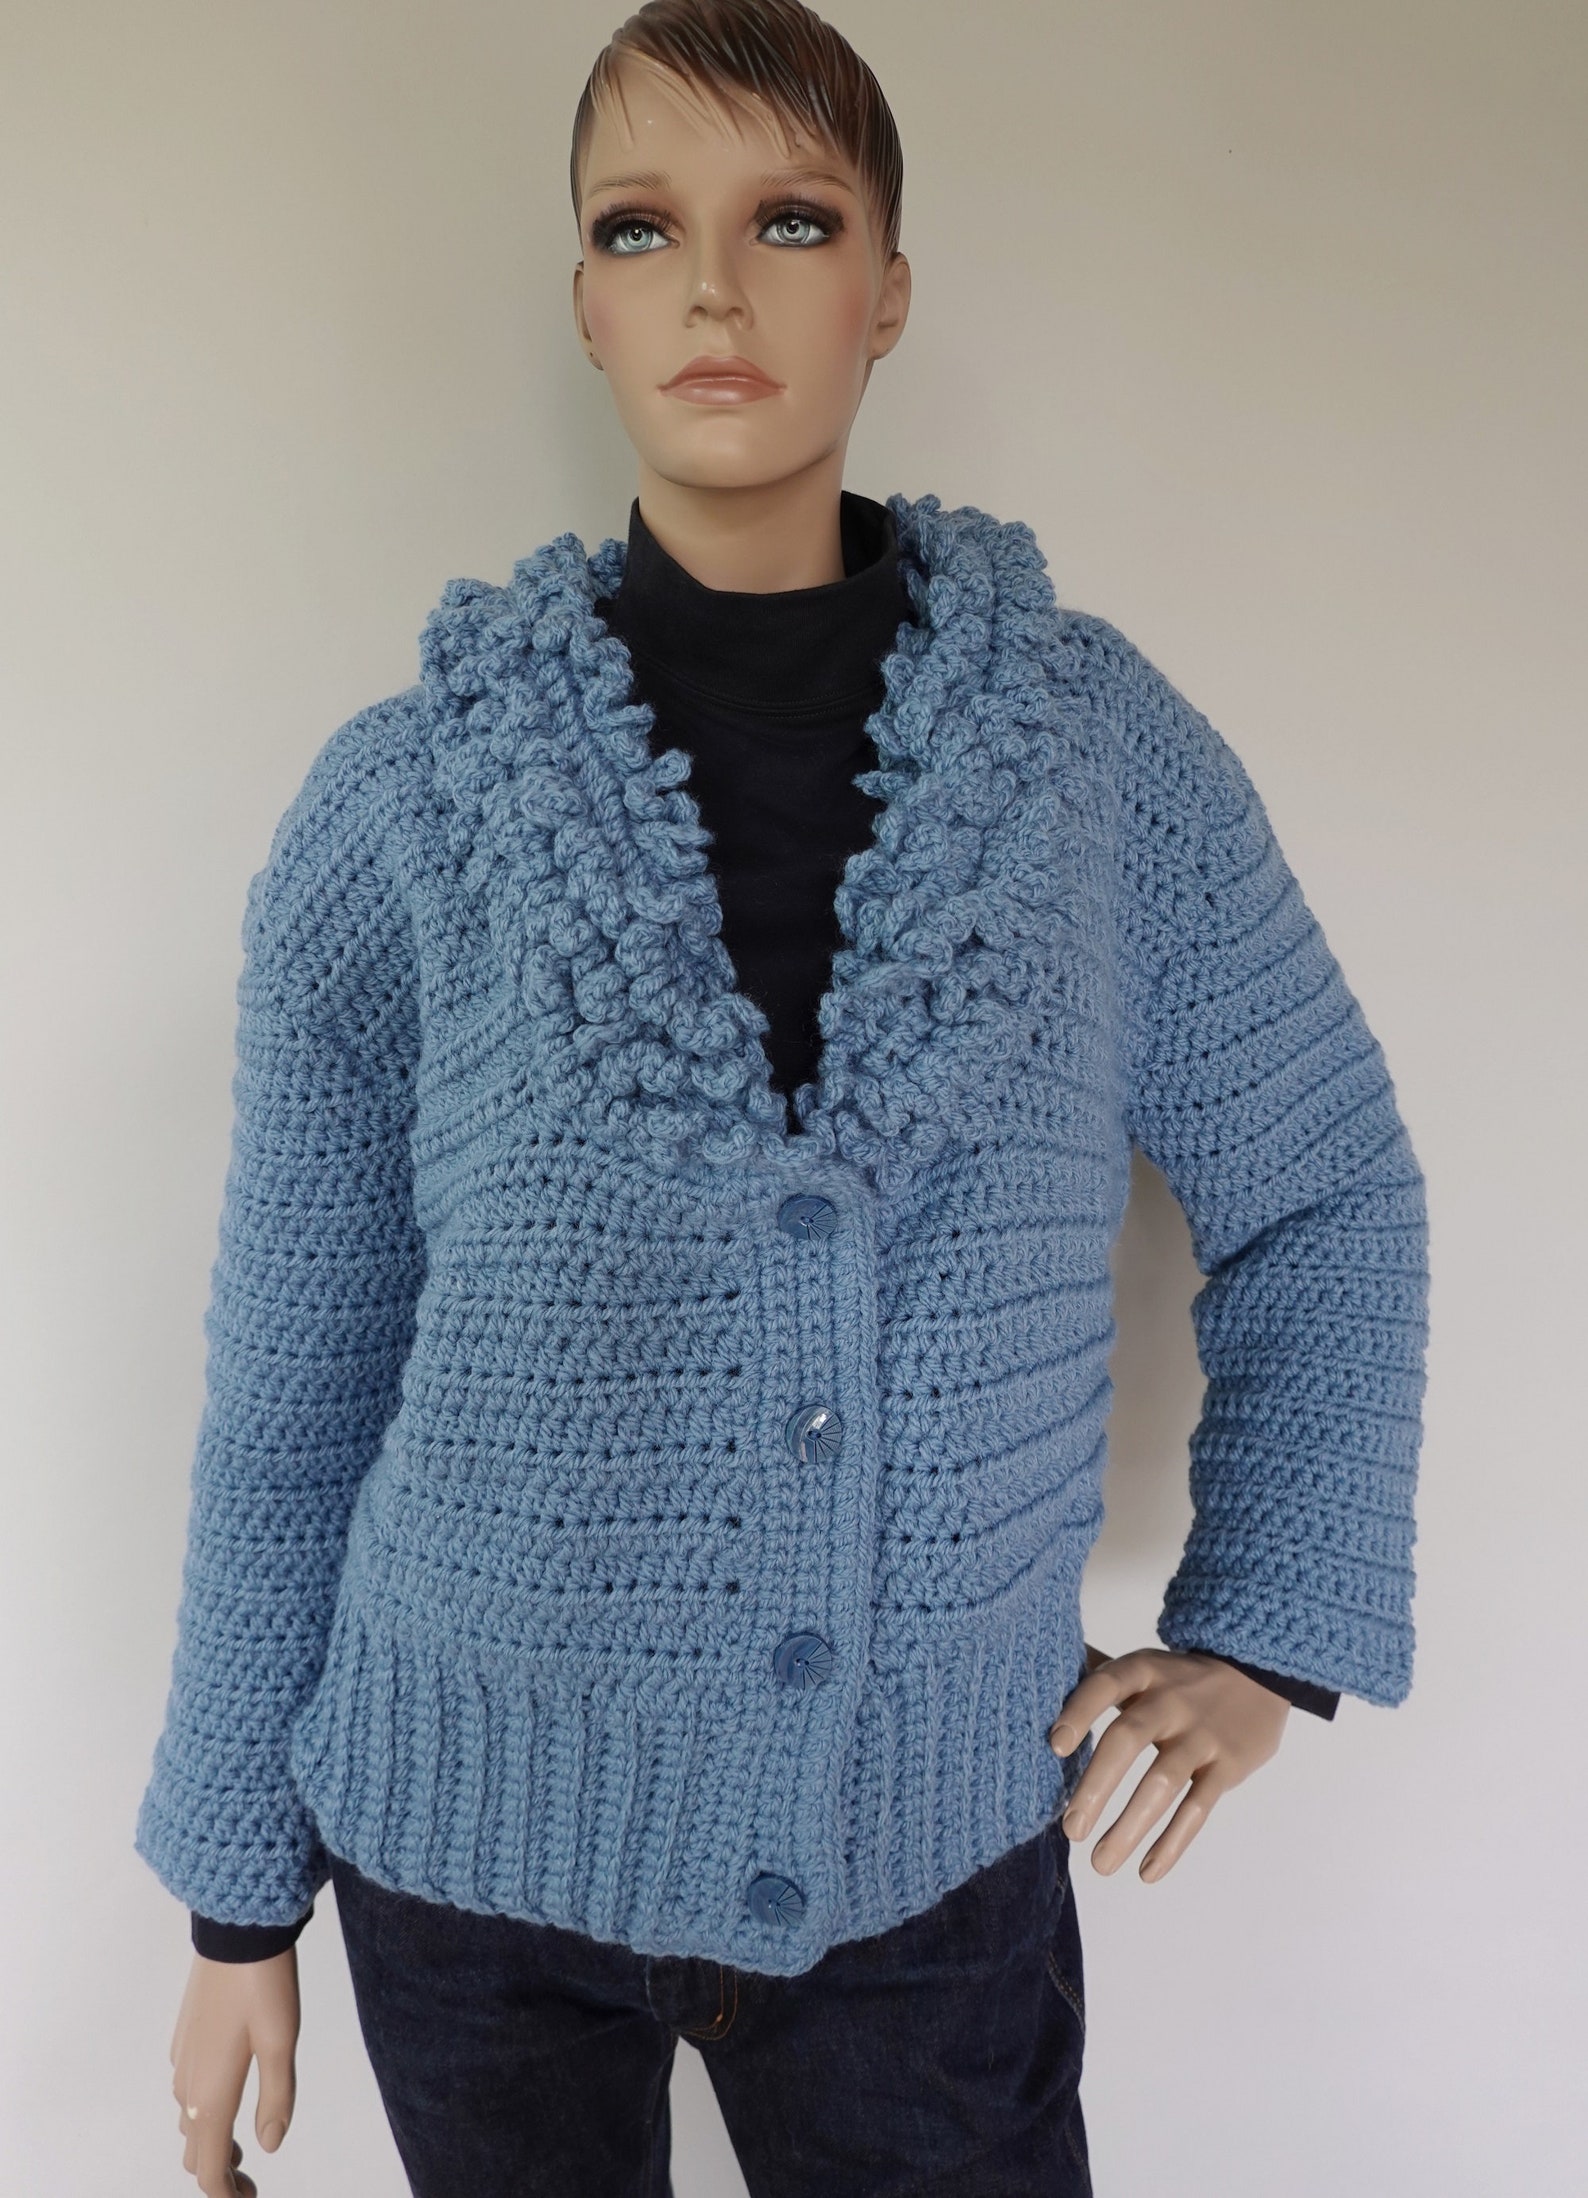 Crochet Bomber Jacket Cardigan Blue Cardigan Cardigans for | Etsy